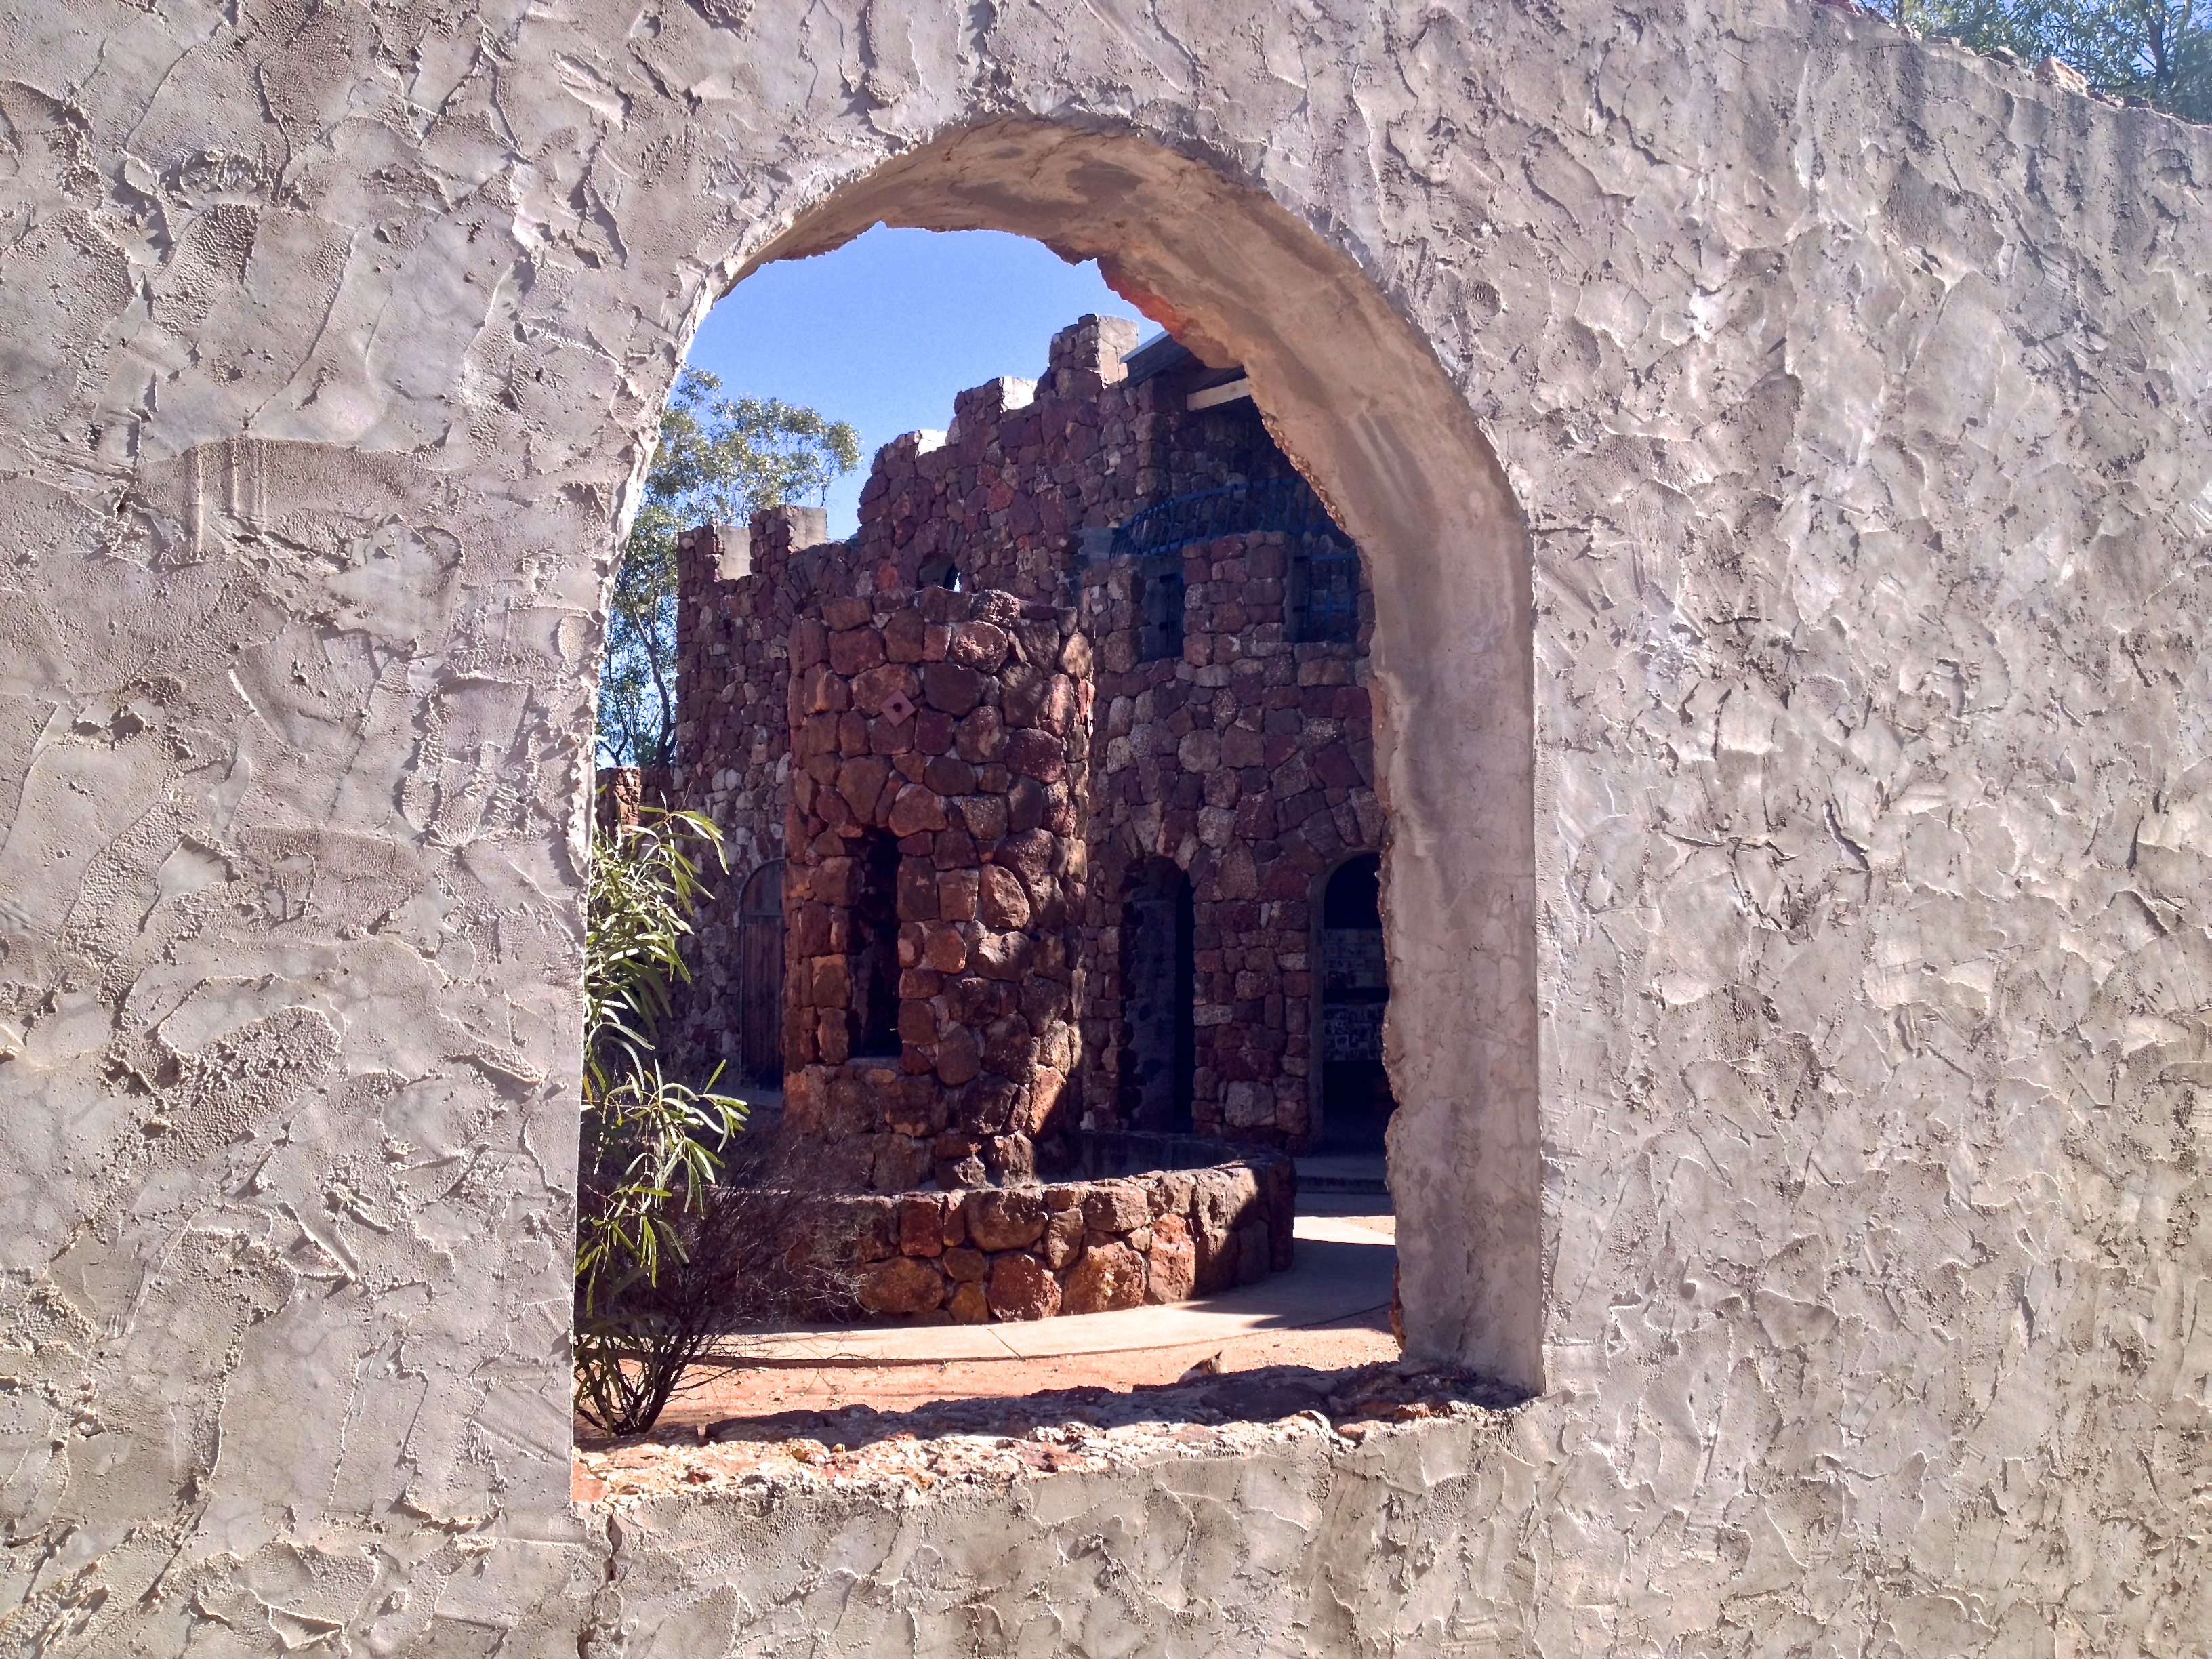 IMG_5339 View of Amigo's Castle through window